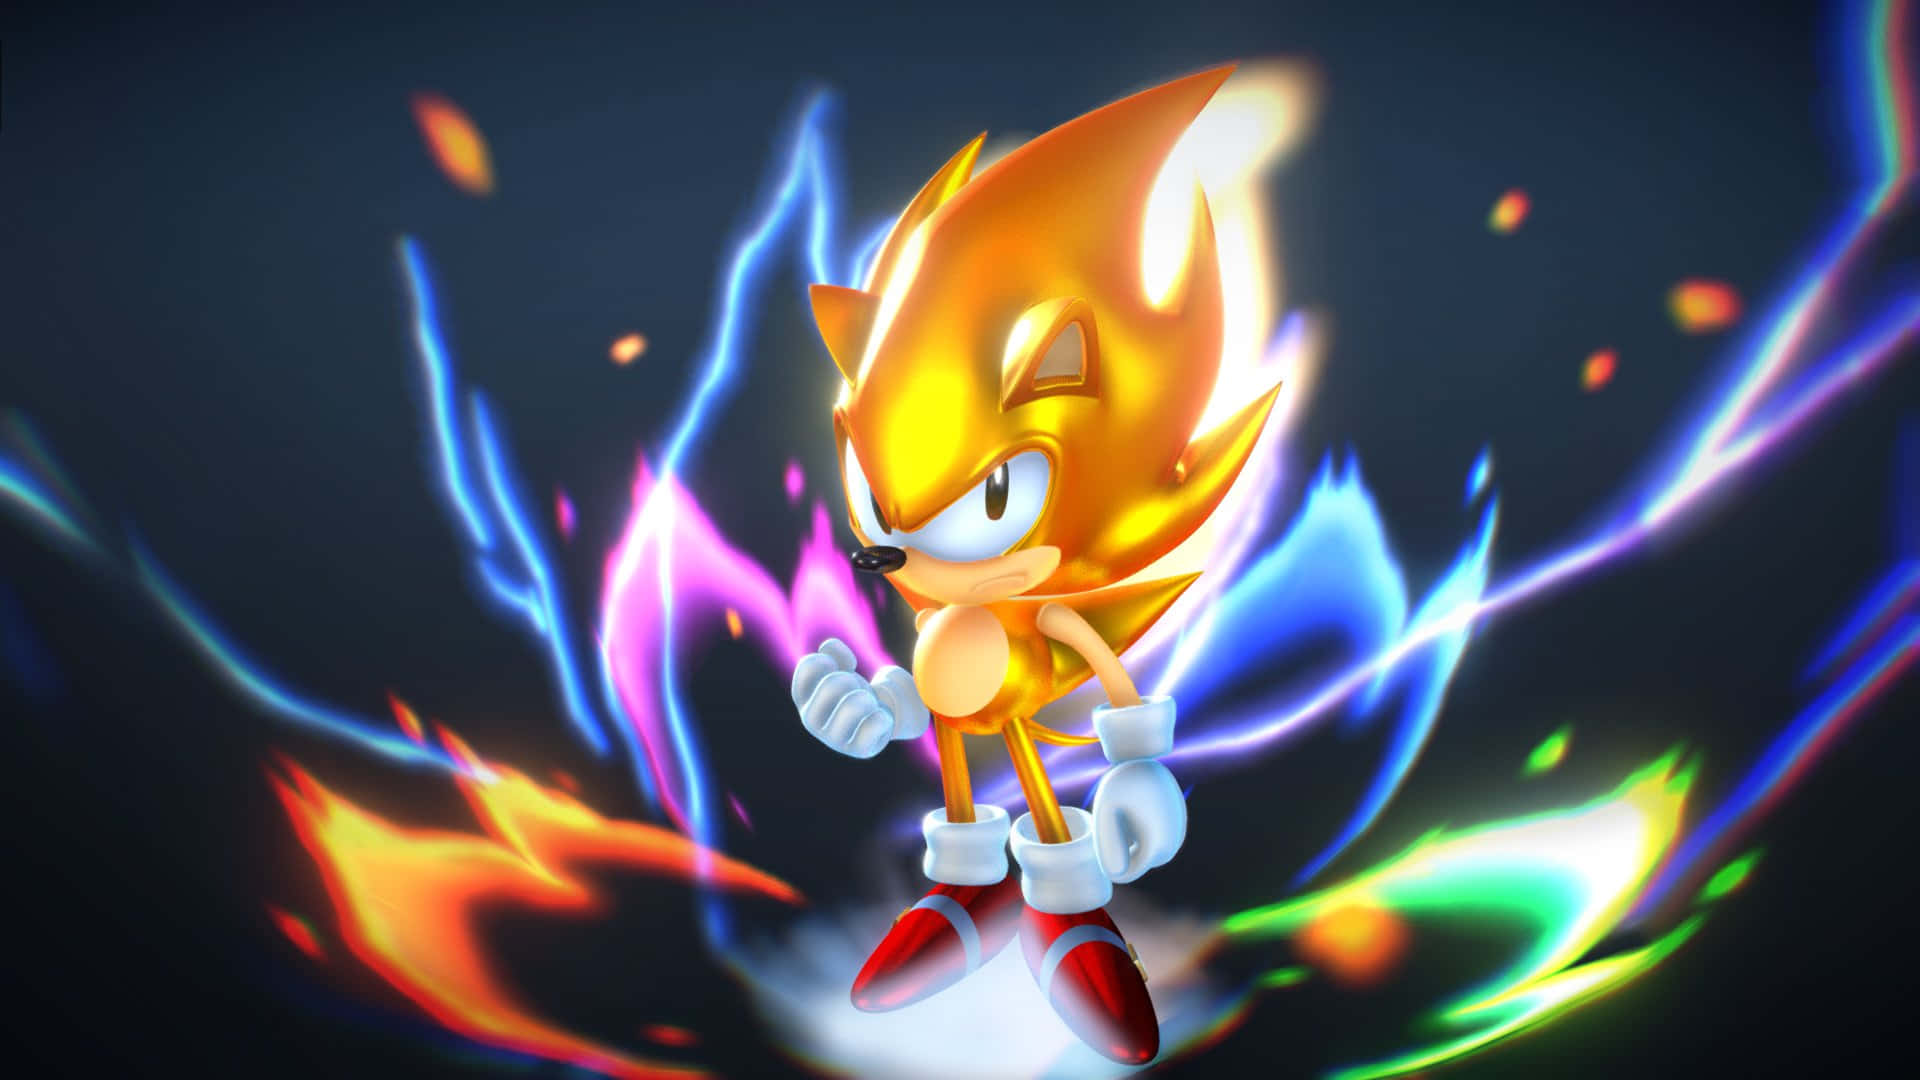 Vibrant Sonic the Hedgehog Art Wallpaper